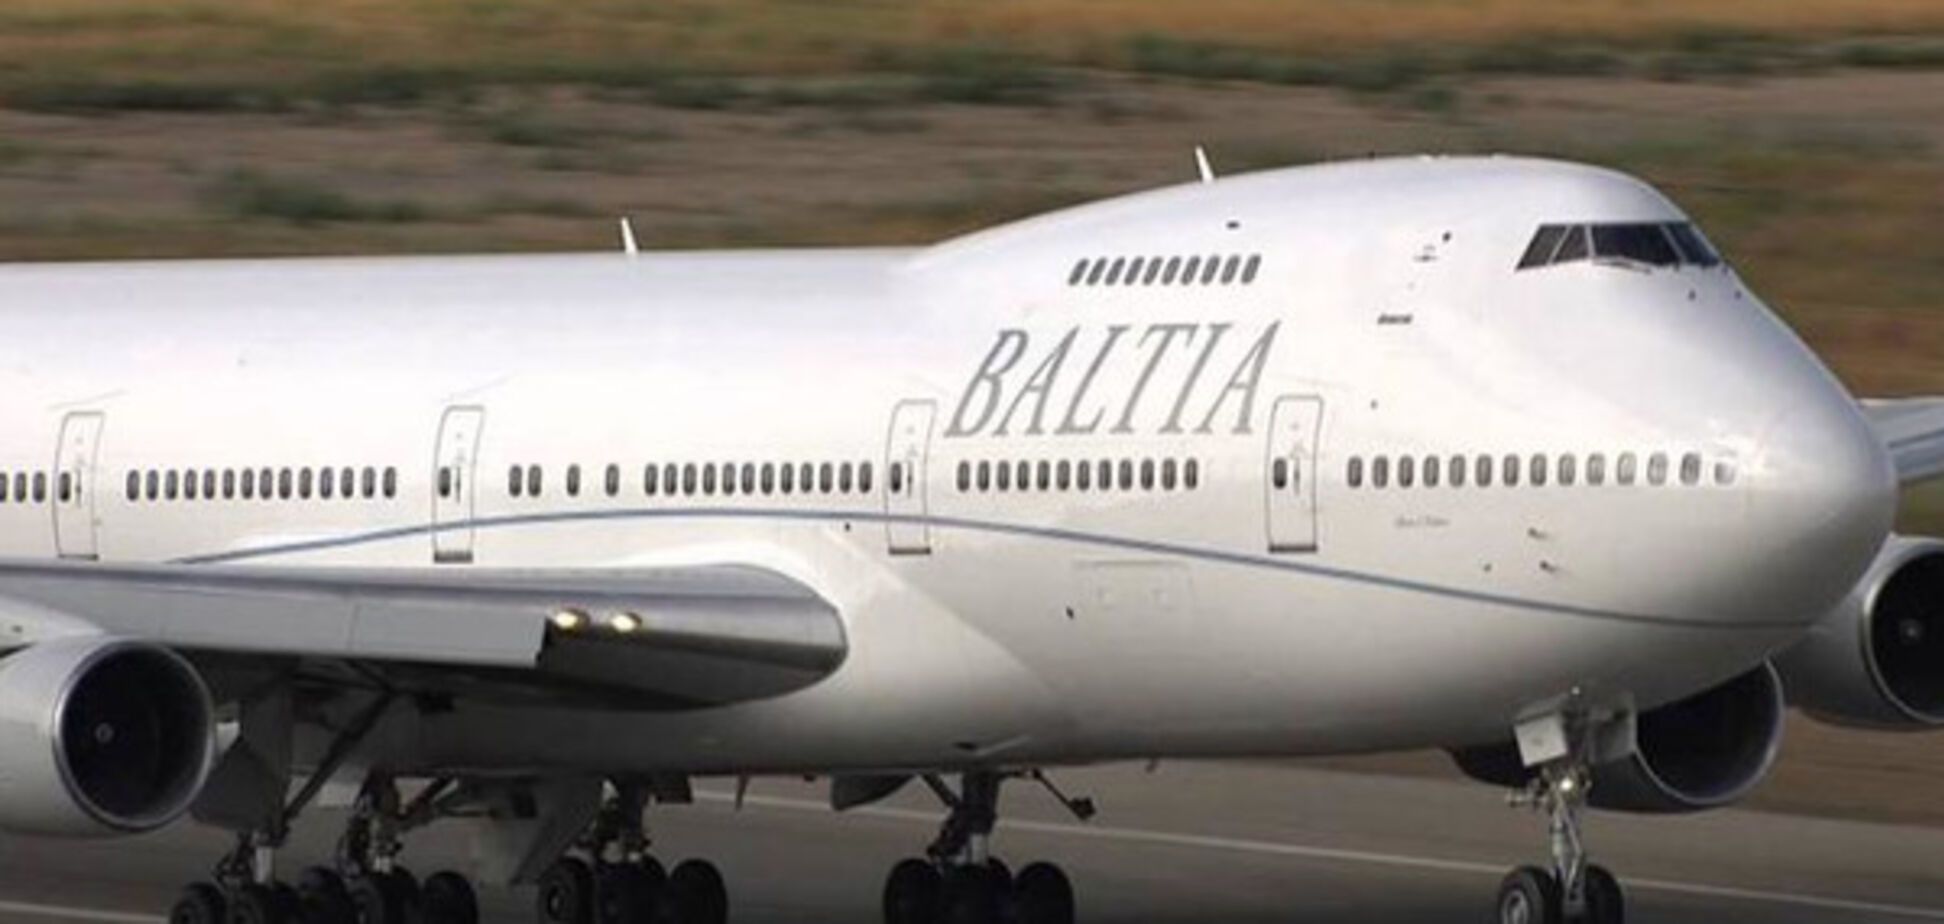 Baltia Airlines